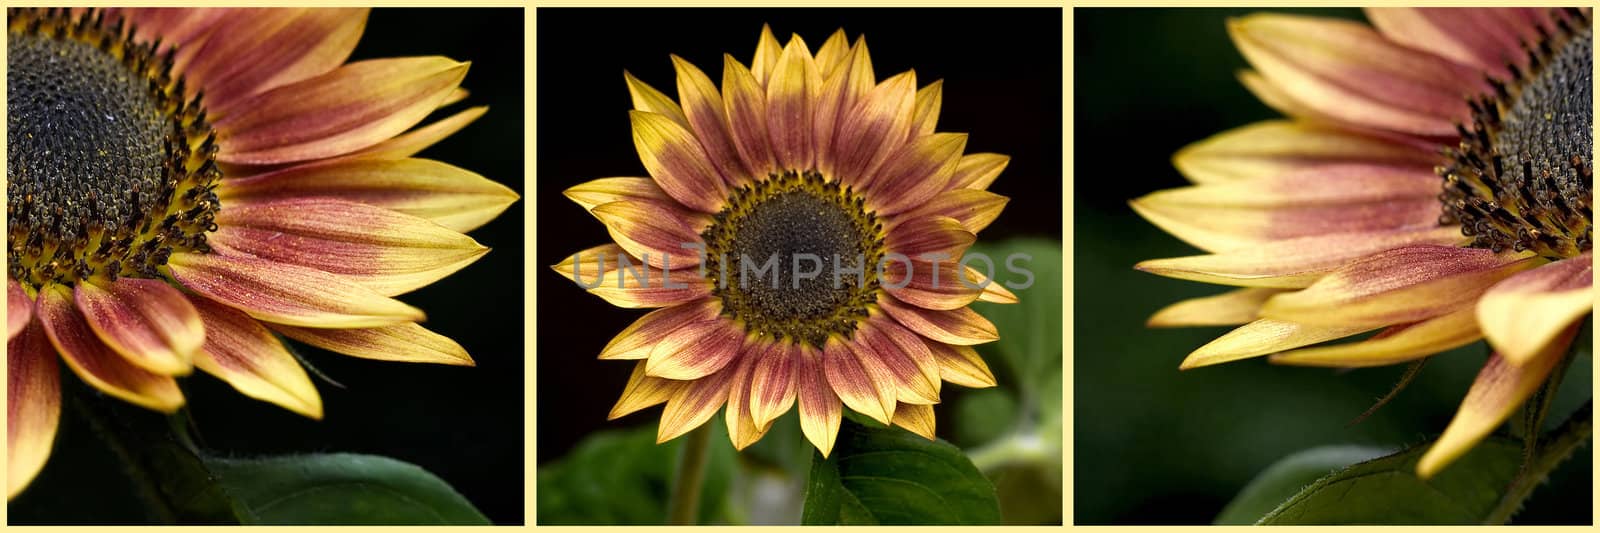 sunflowers - collage by miradrozdowski